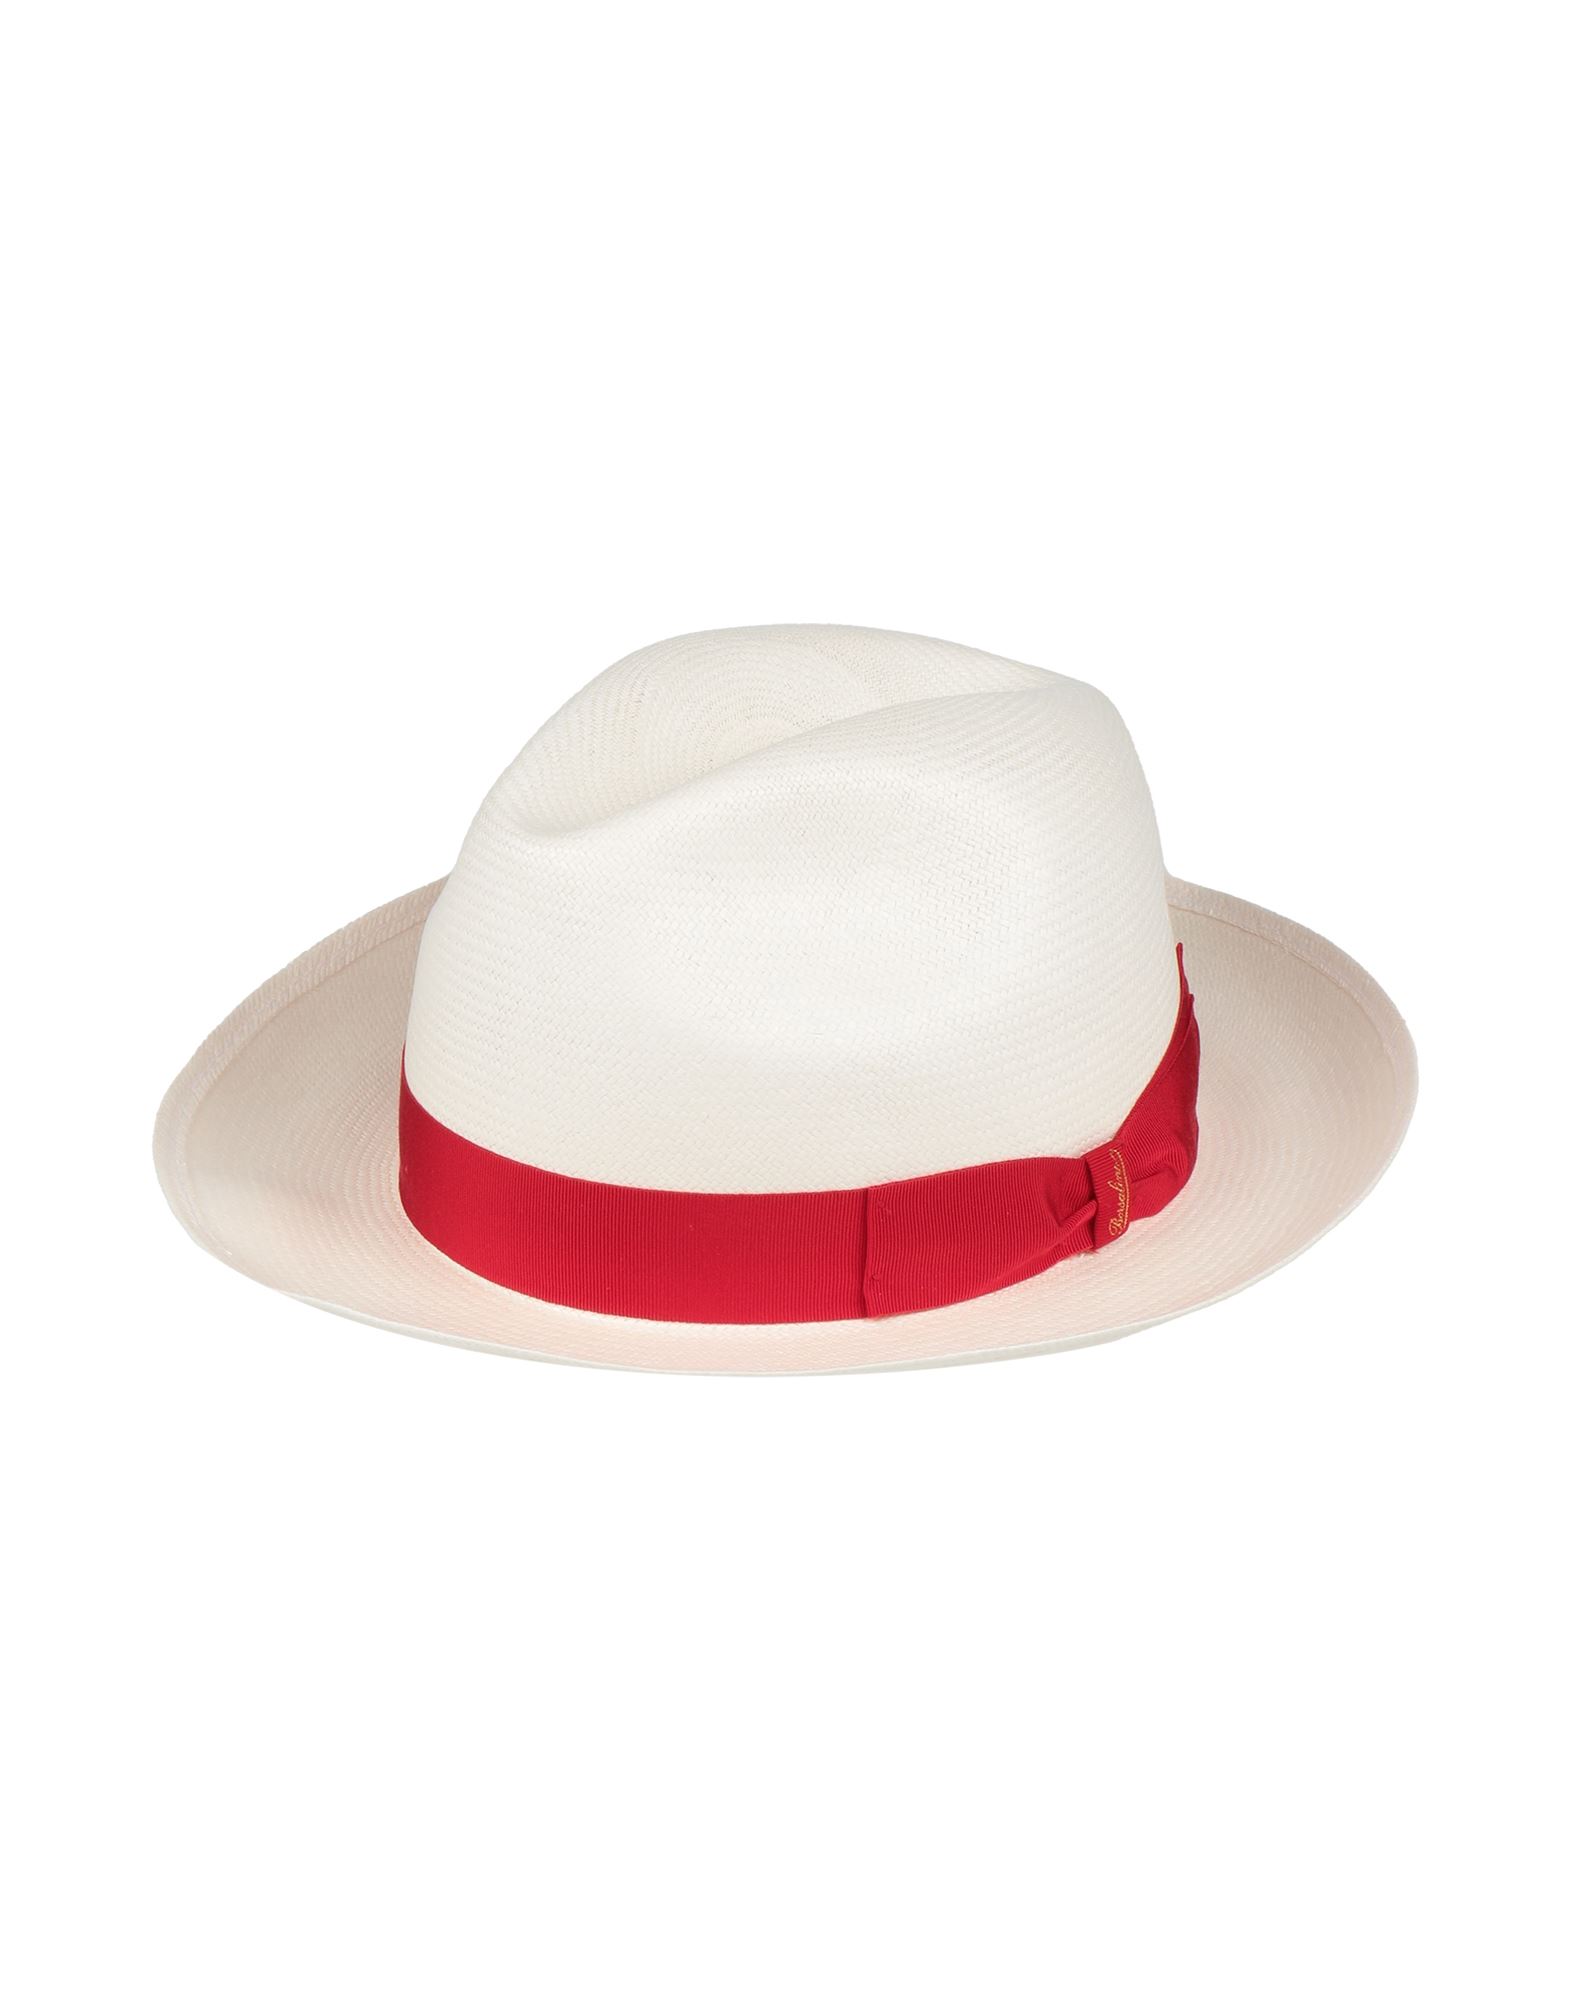 Shop Borsalino Man Hat White Size 7 ¼ Straw